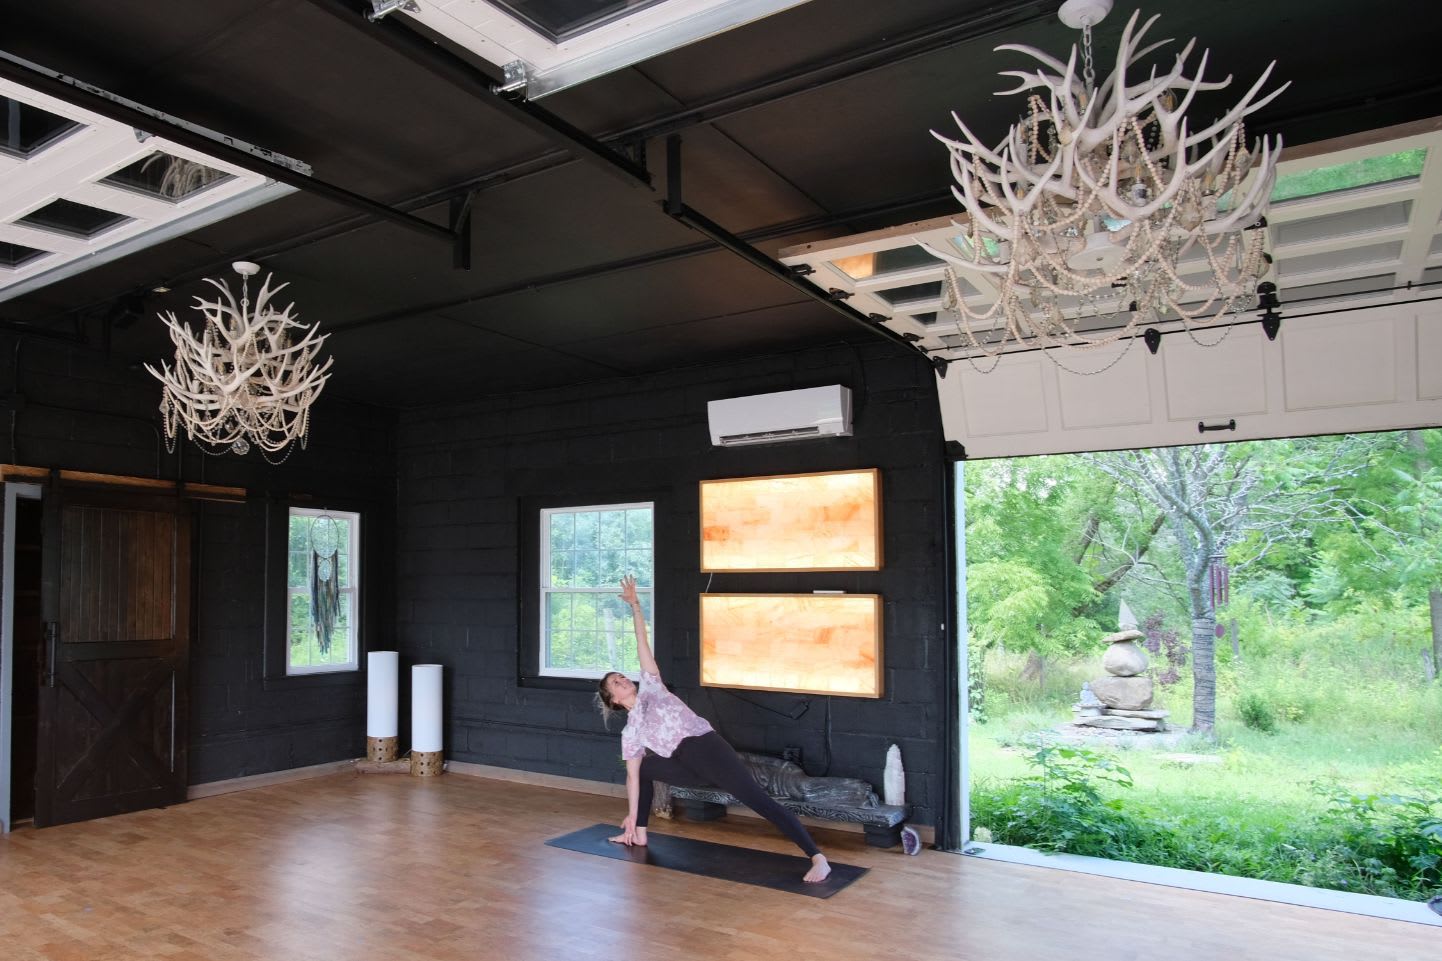 The Garden Yoga Studio: Read Reviews and Book Classes on ClassPass